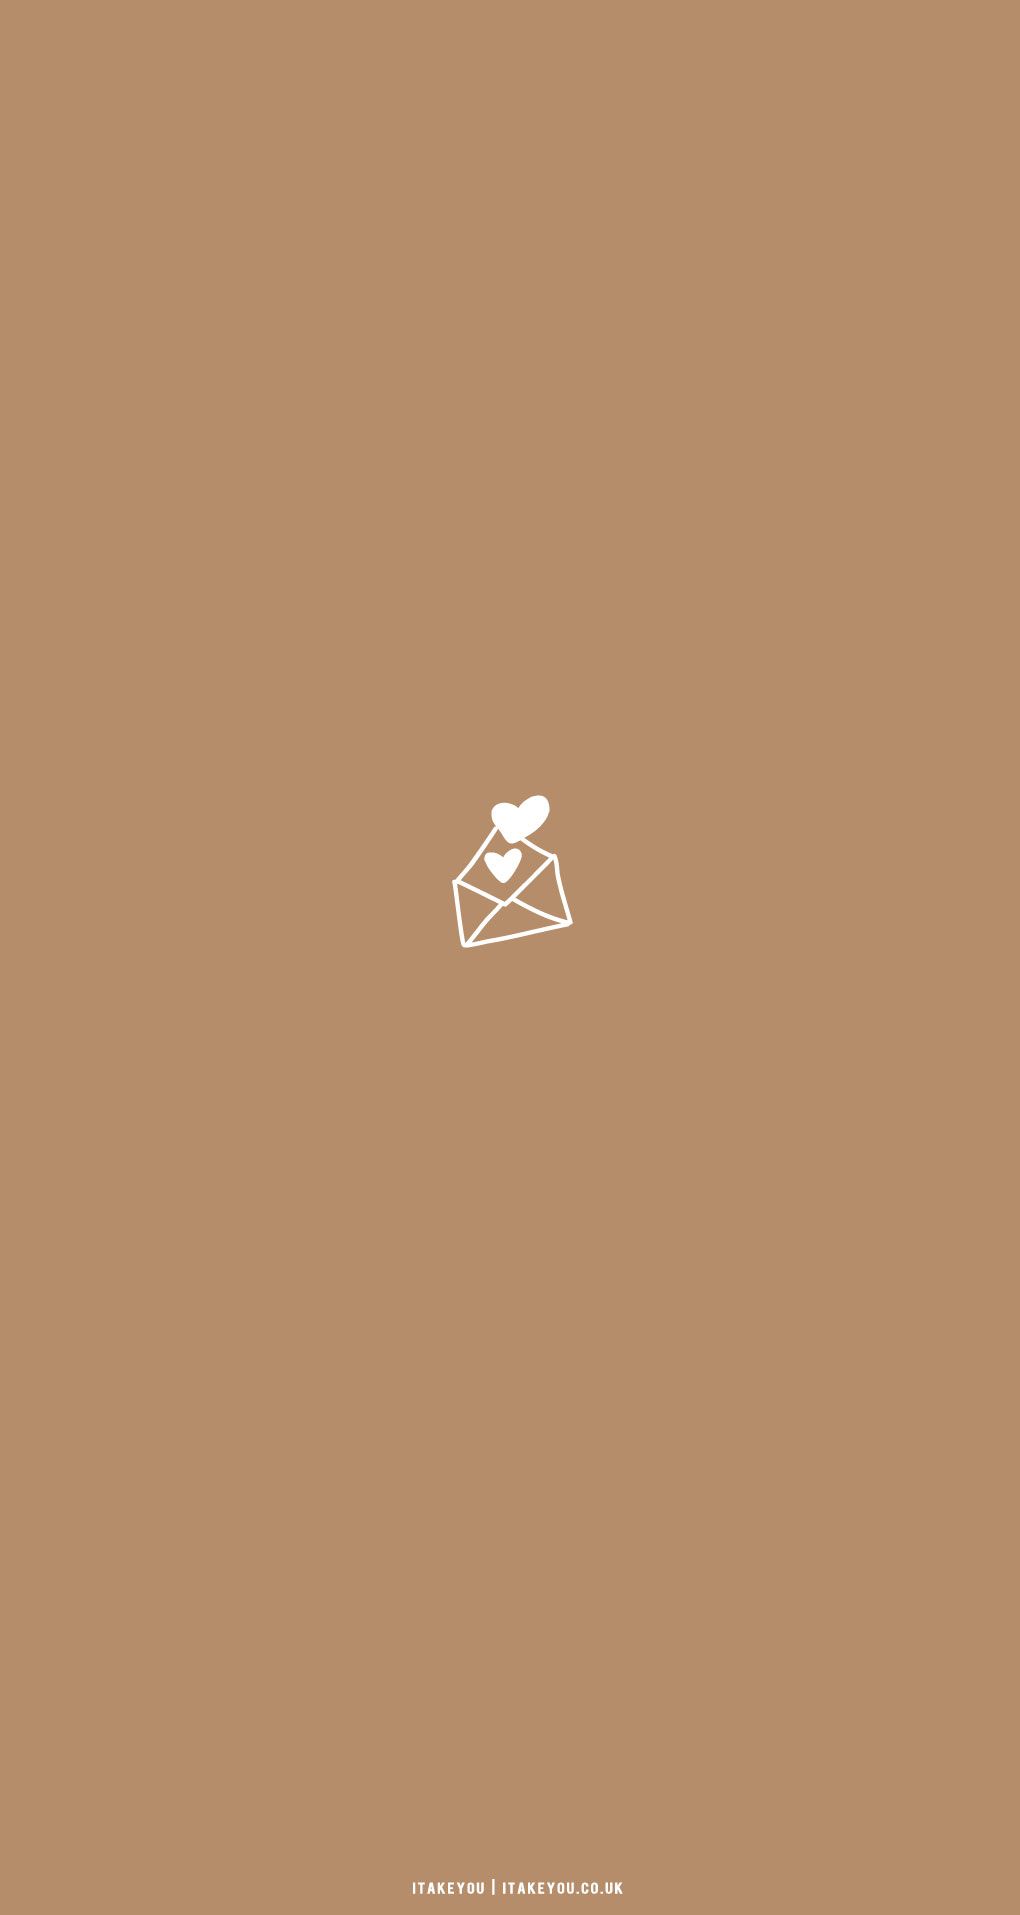  Love Hintergrundbild 1020x1915. Cute Brown Aesthetic Wallpaper for Phone : Love Letter Background I Take You. Wedding Readings. Wedding Ideas